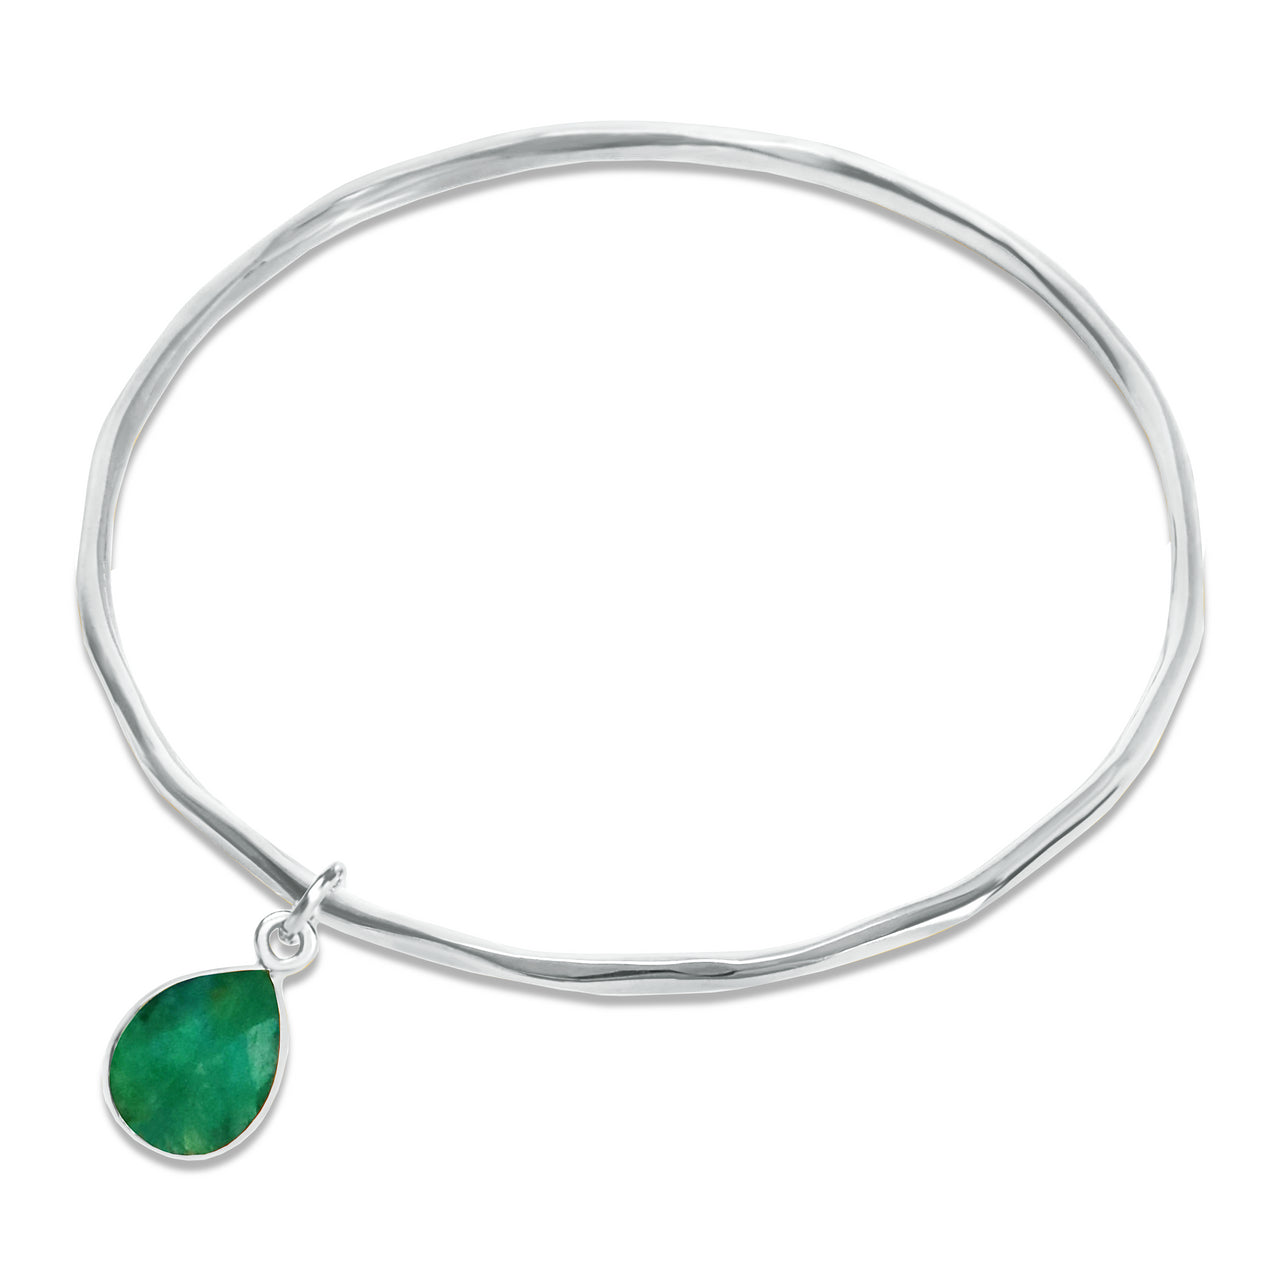 Thin silver bangle with tear drop emerald